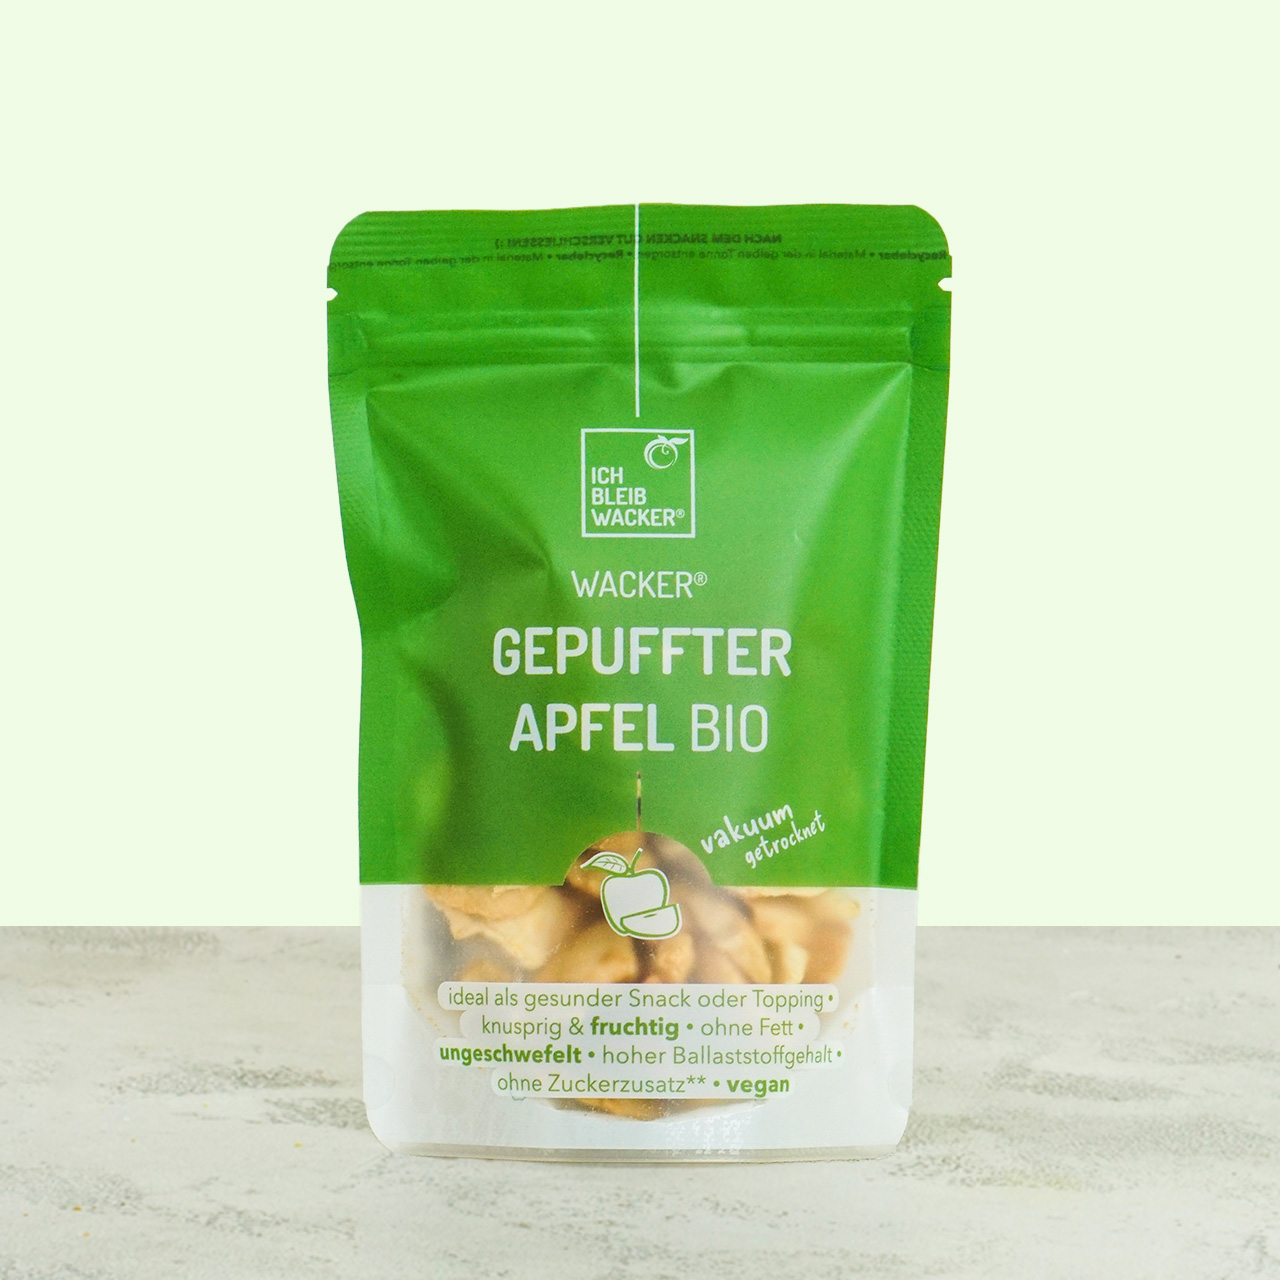 Gepuffter Apfel Bio, 30g